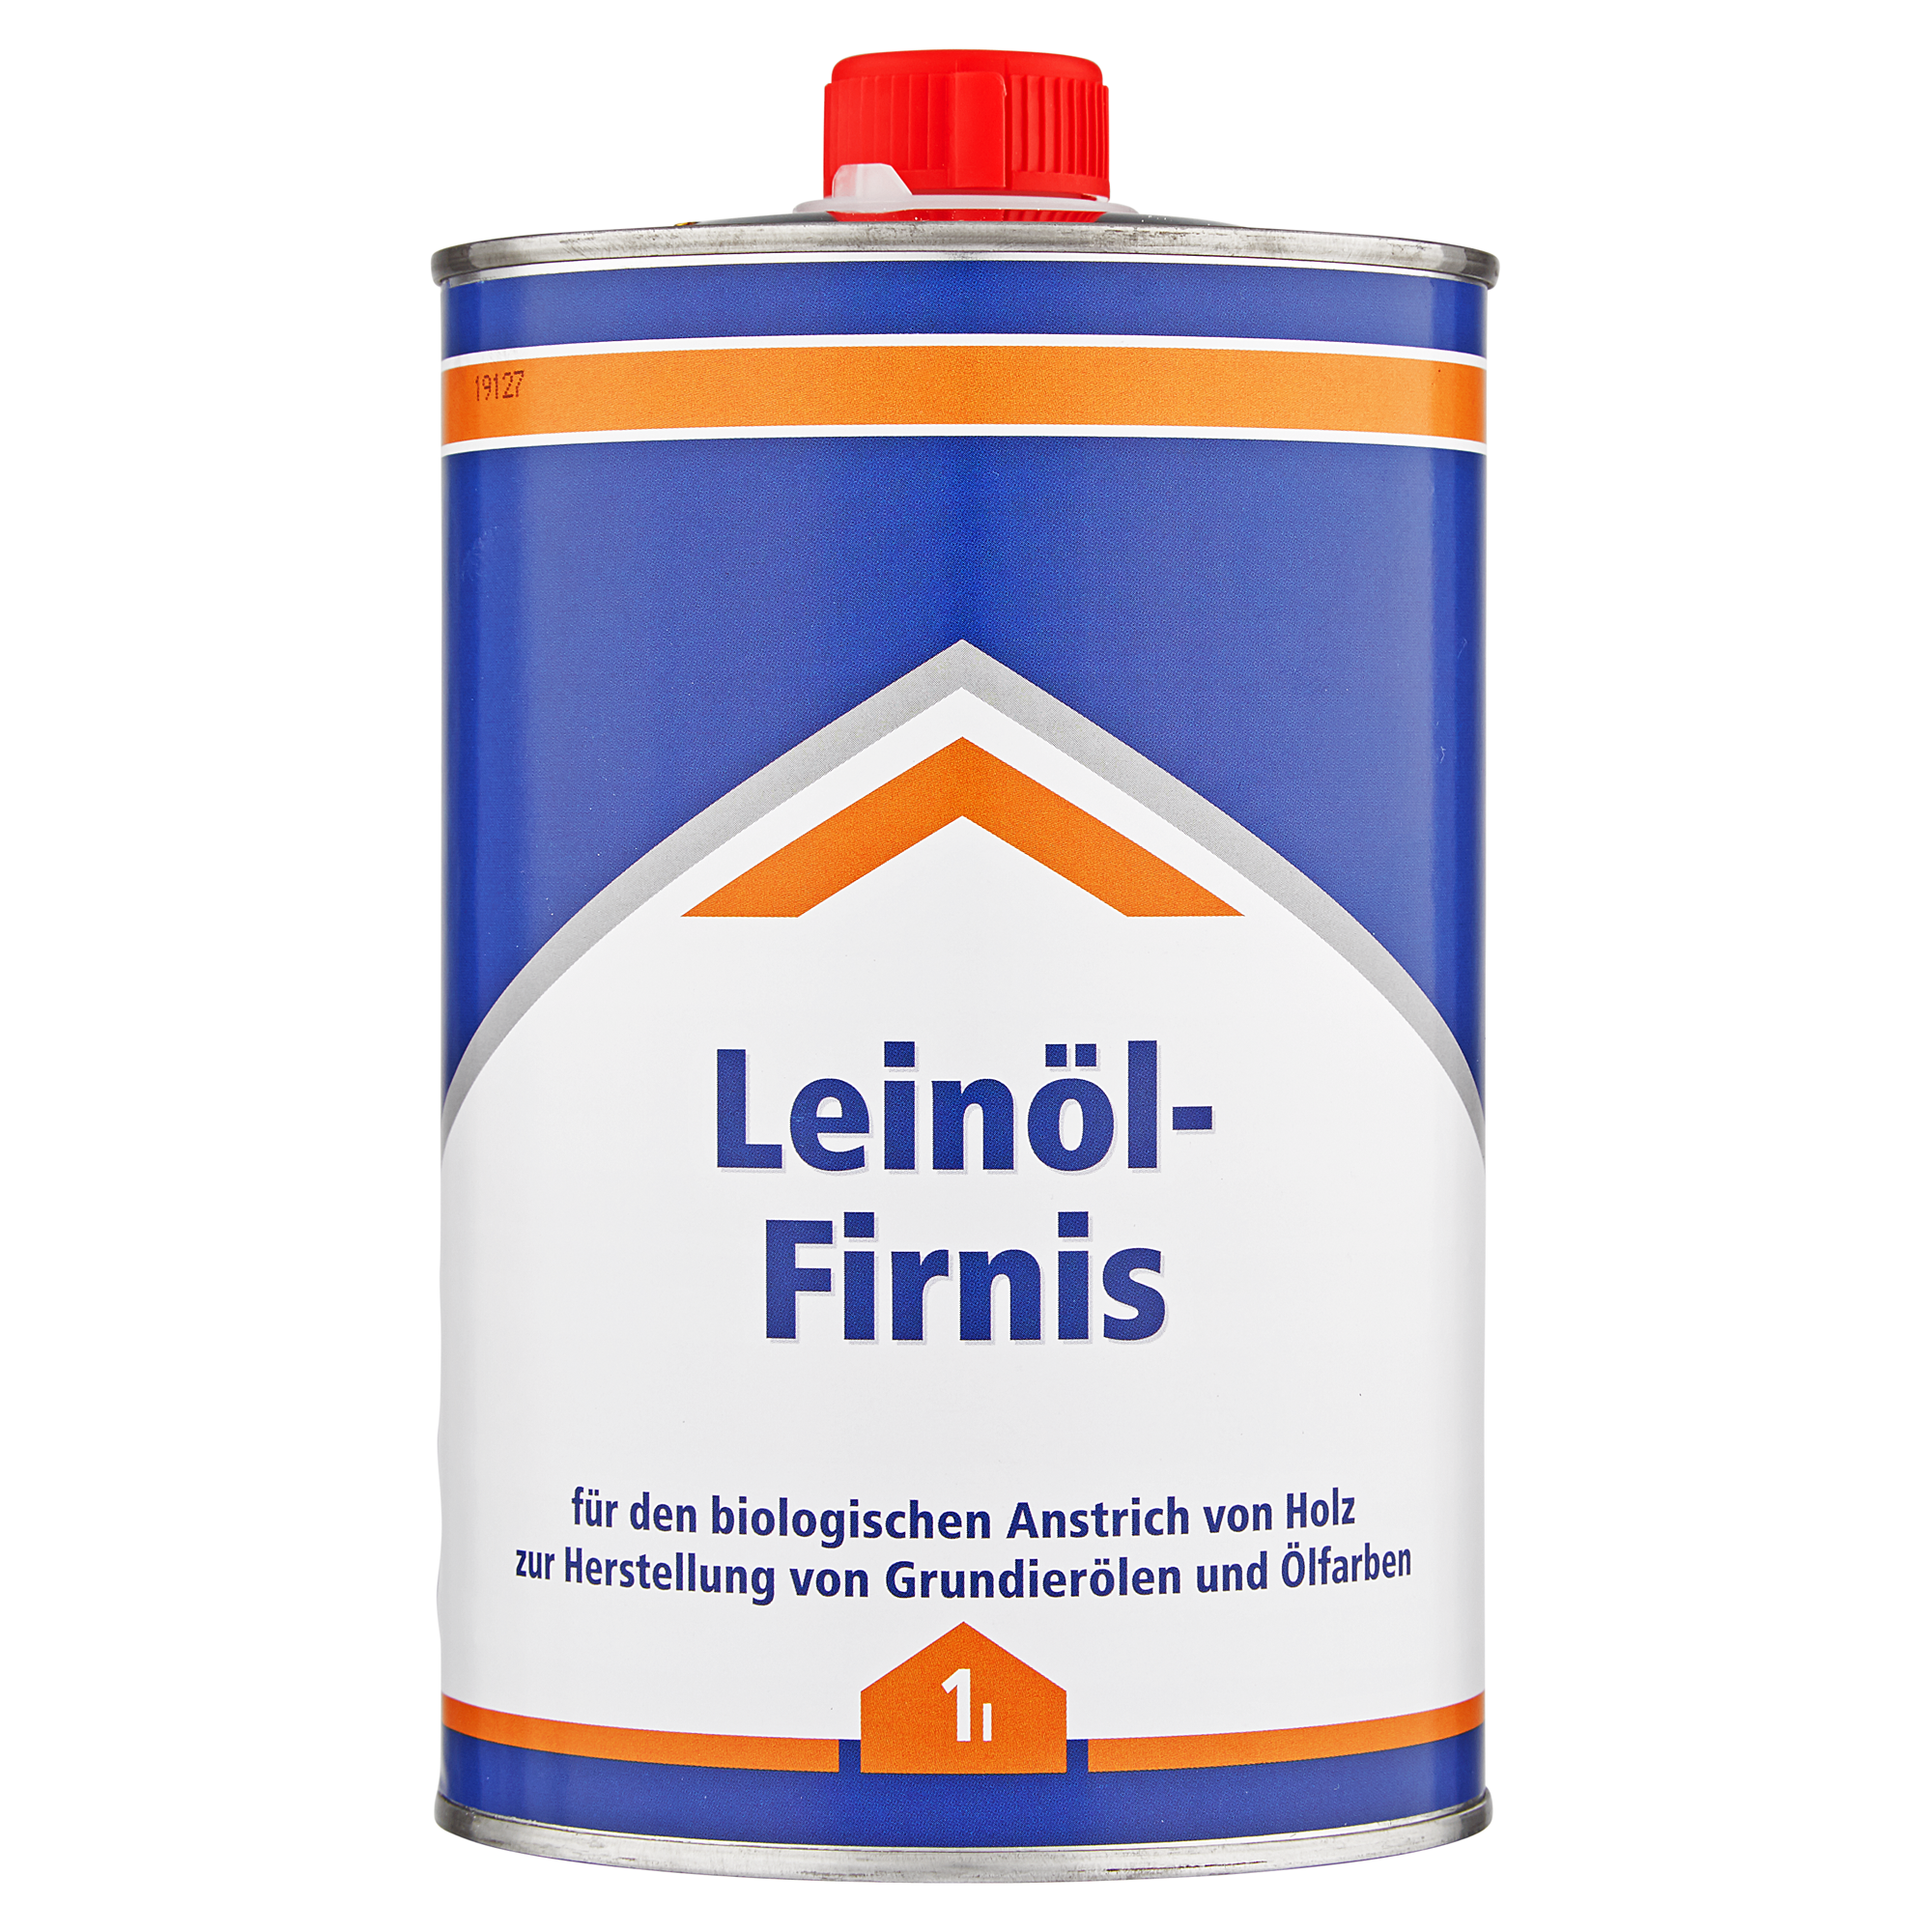 Leinöl-Firnis 1 l + product picture